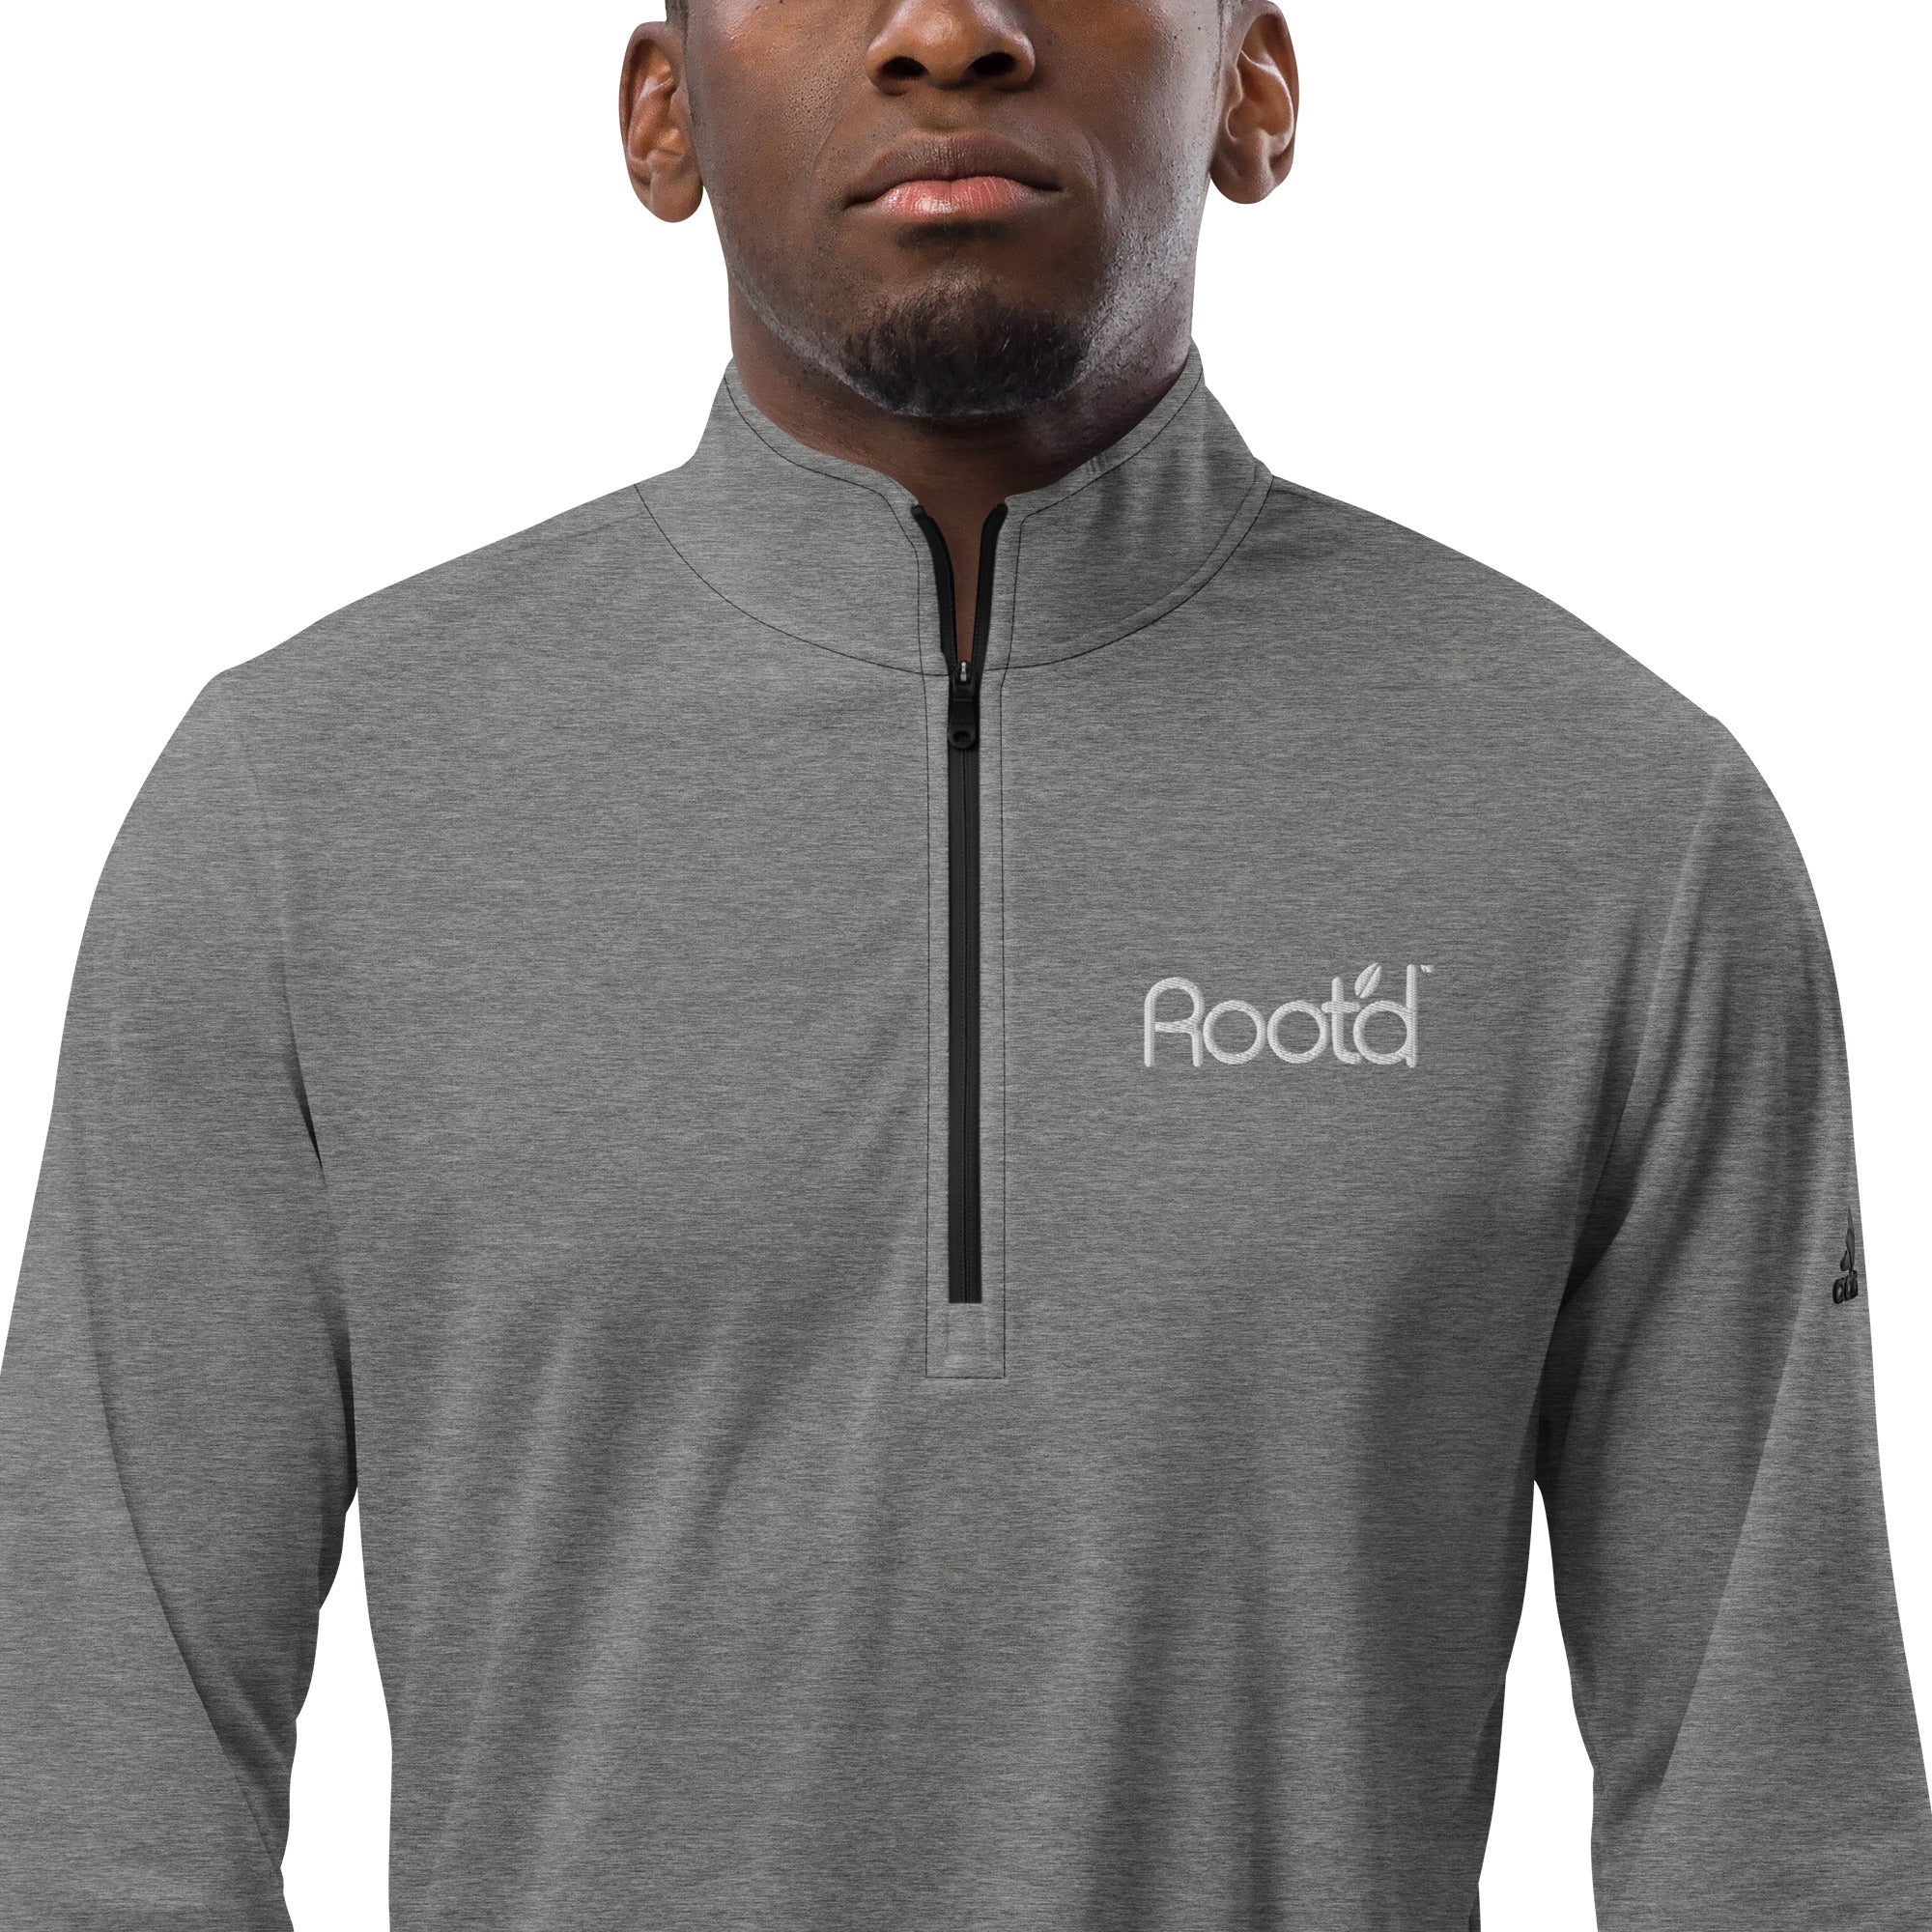 Root'd + Adidas Quarter zip pullover